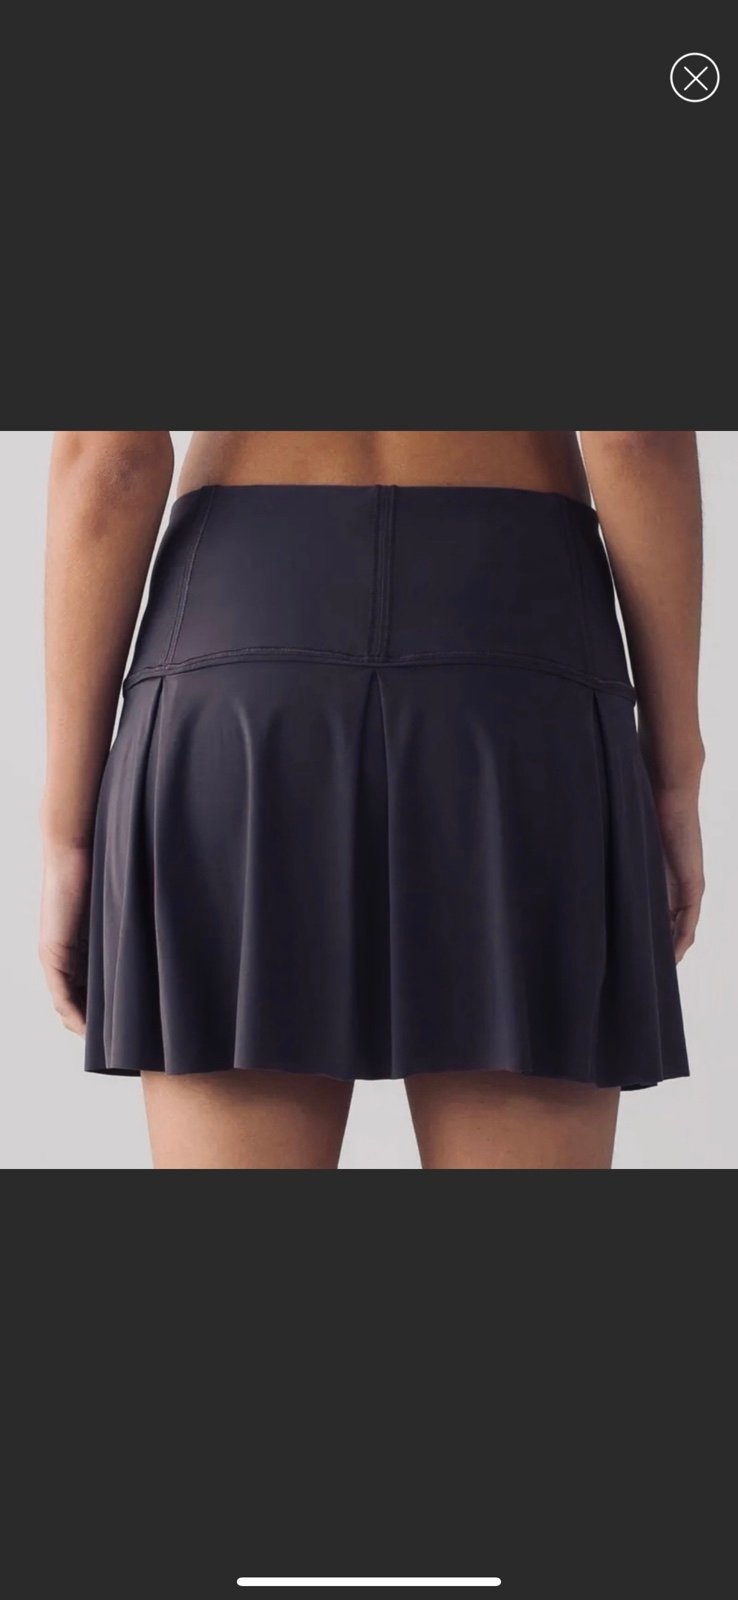 Perfect Lululemon Lost In Pace Skirt Size 8 Black JVG6YBkAI best sale